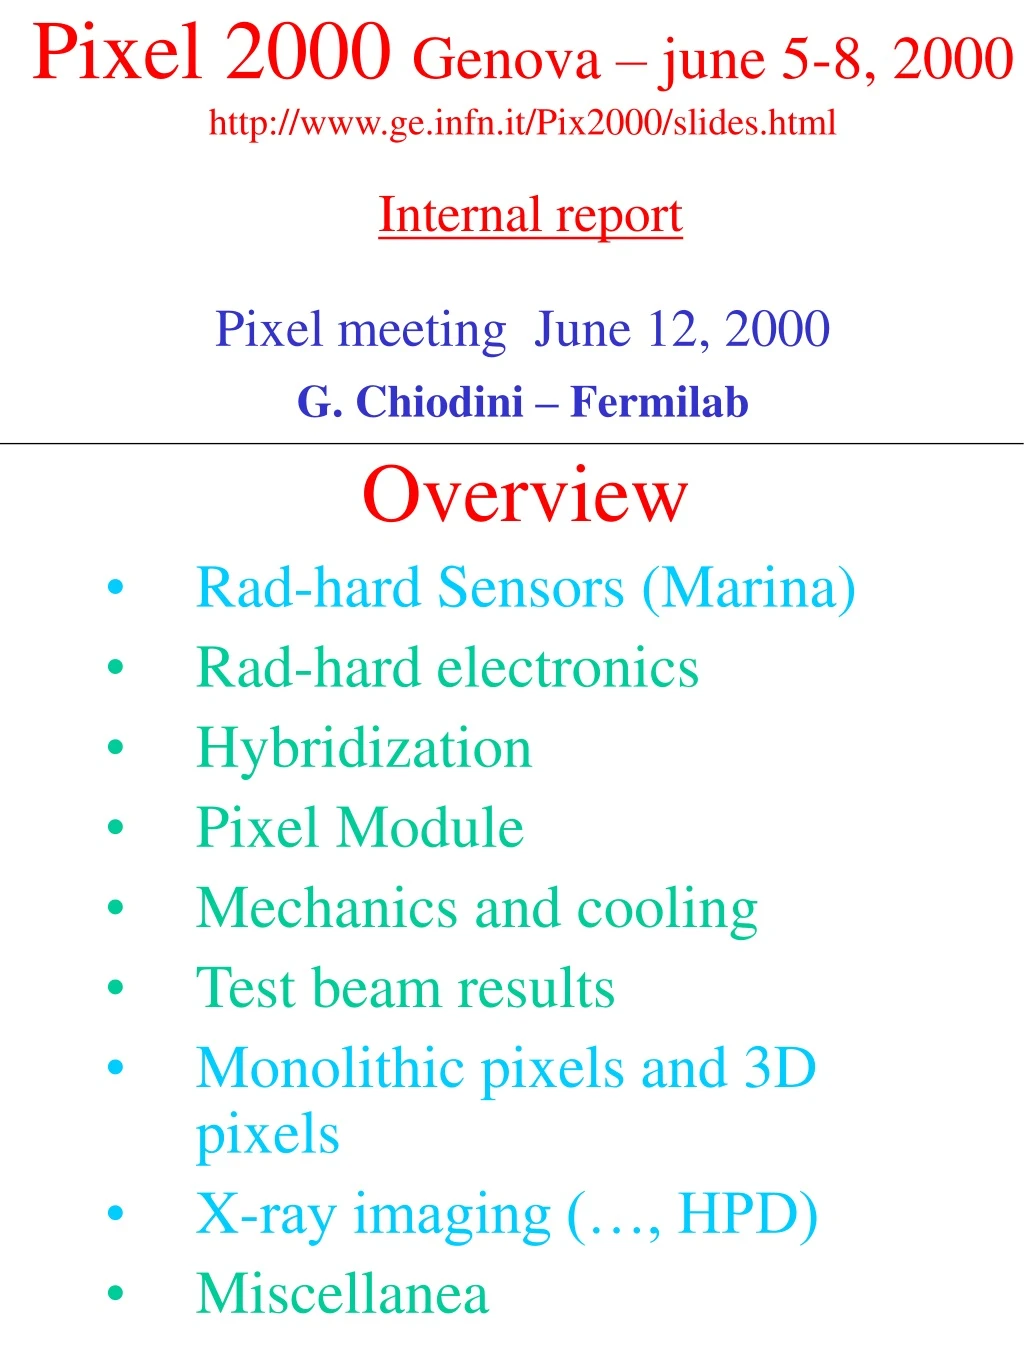 pixel 2000 genova june 5 8 2000 http www ge infn it pix2000 slides html internal report